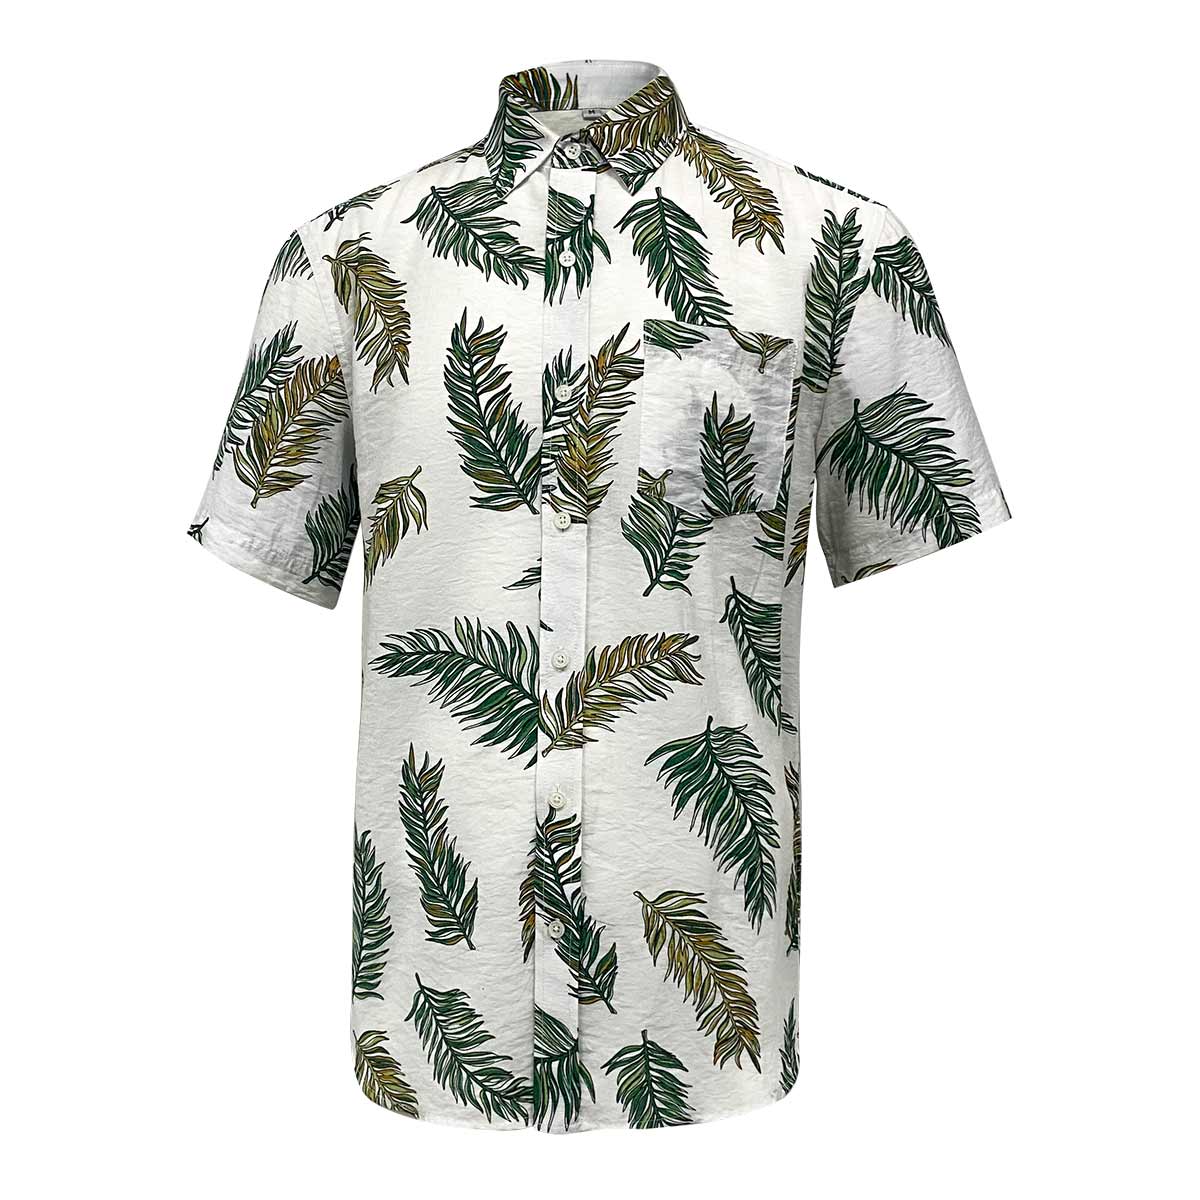 TianYun Customize Men’s Cotton Casual Button Up Beach Aloha Hawaiian Shirts